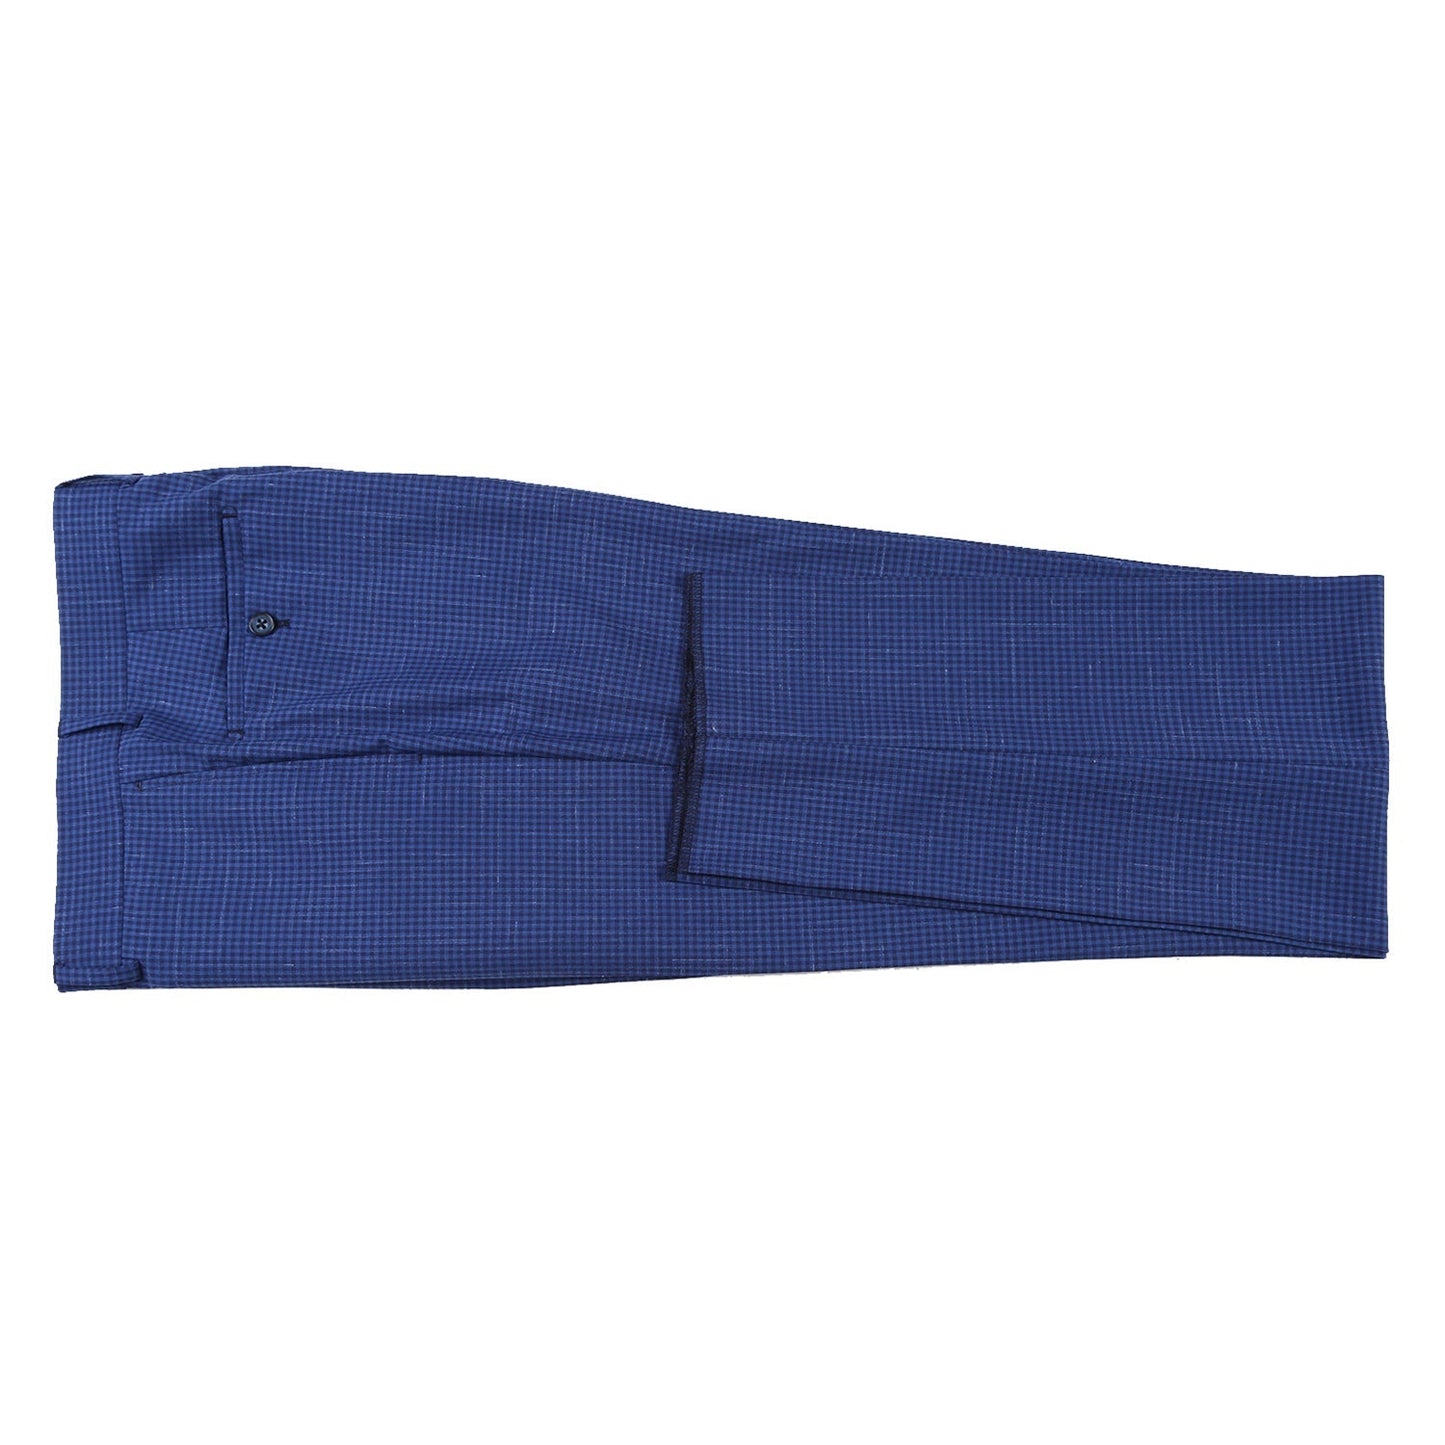 EL72-15-405 Slim Fit English Laundry Blue Mini-Check Wool Suit